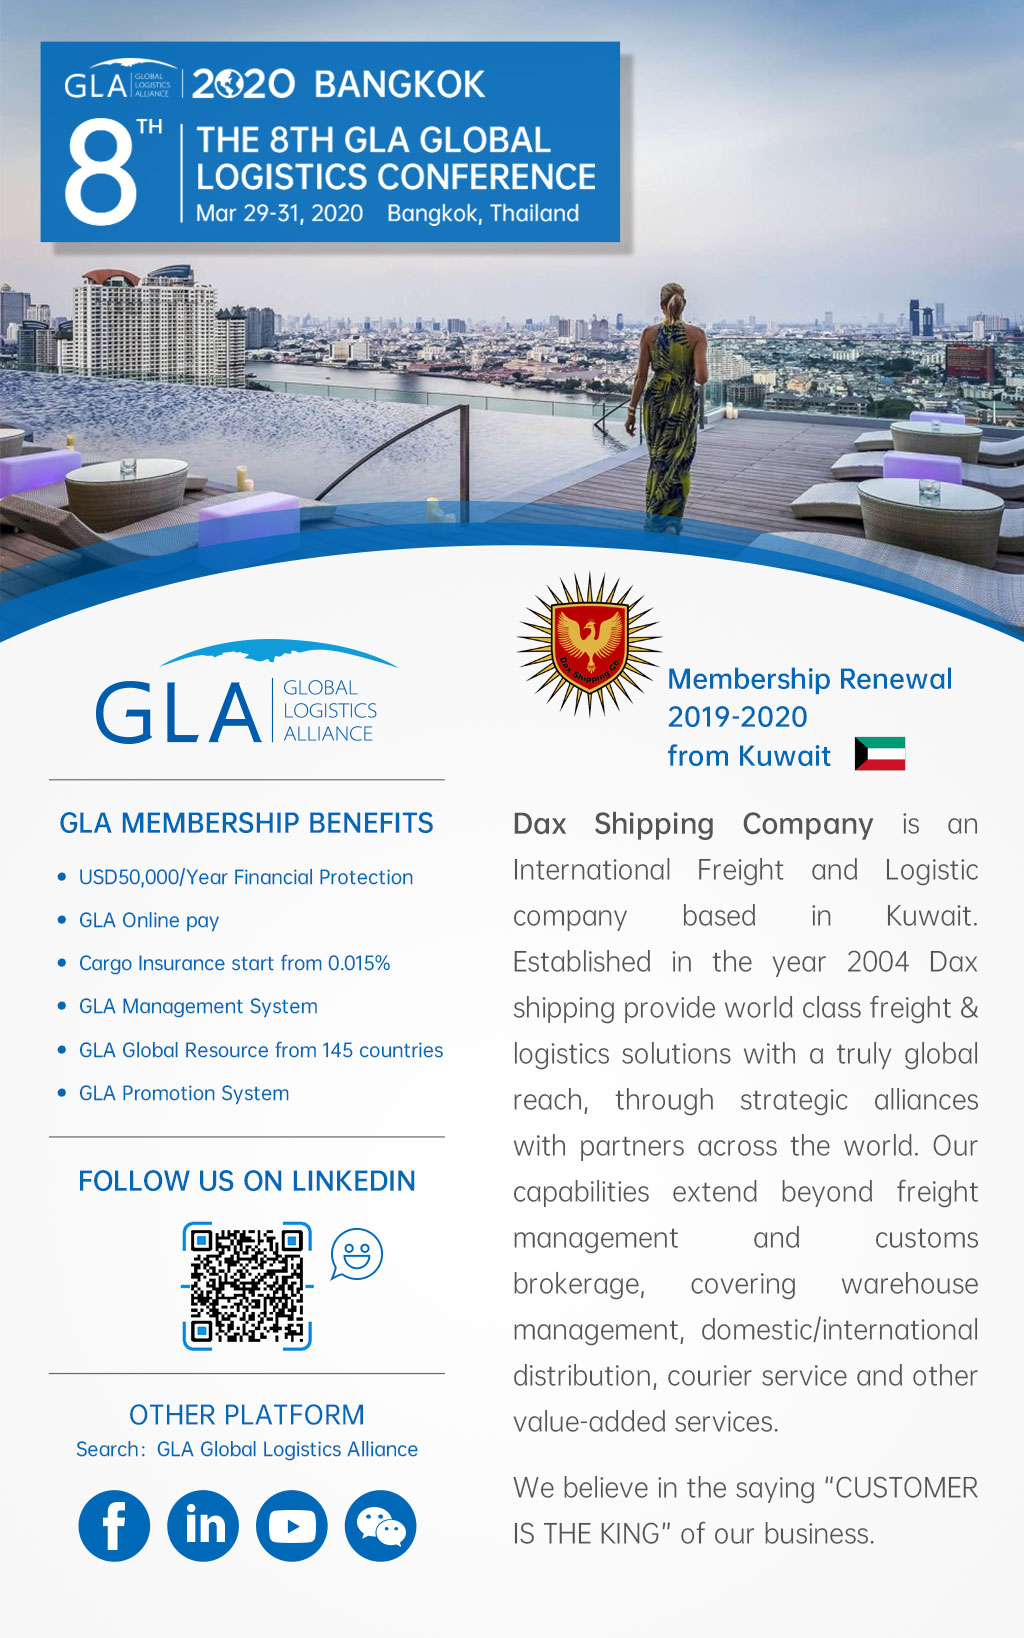 GLA Membership Renewal — Dax Shipping Co. from Kuwait